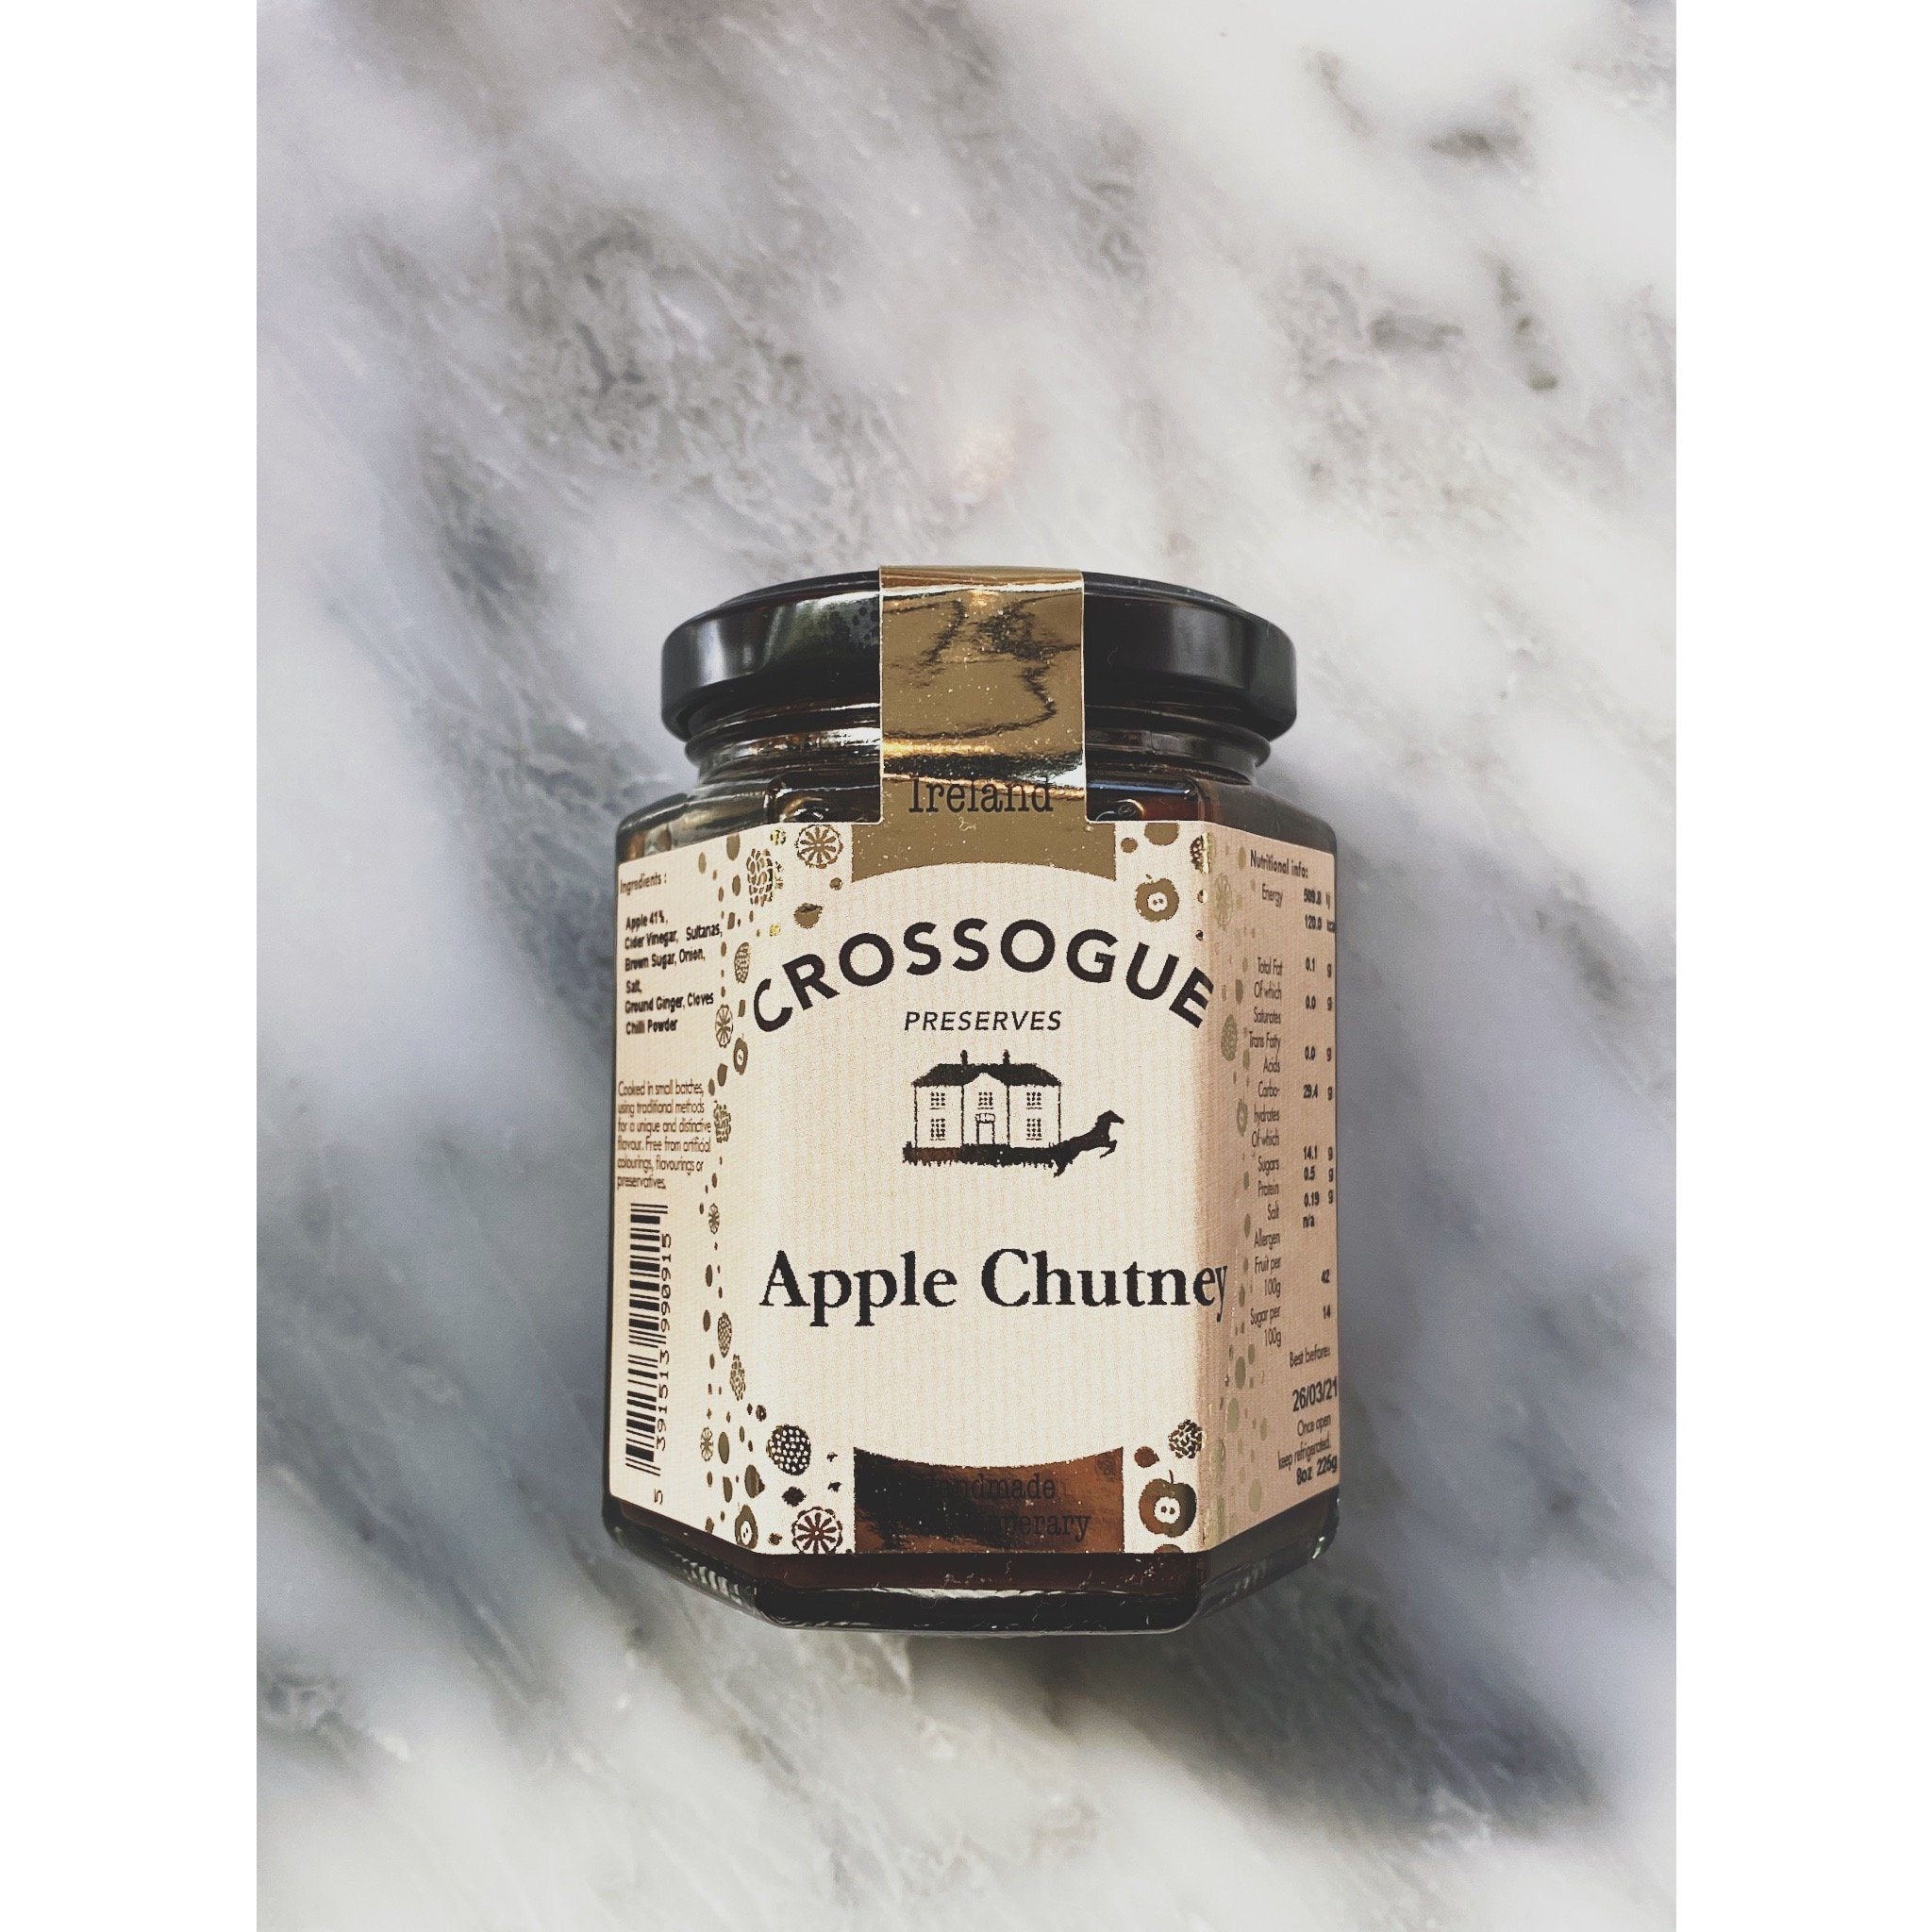 Crossogue Preserves - Apple Chutney - Kate's Kitchen